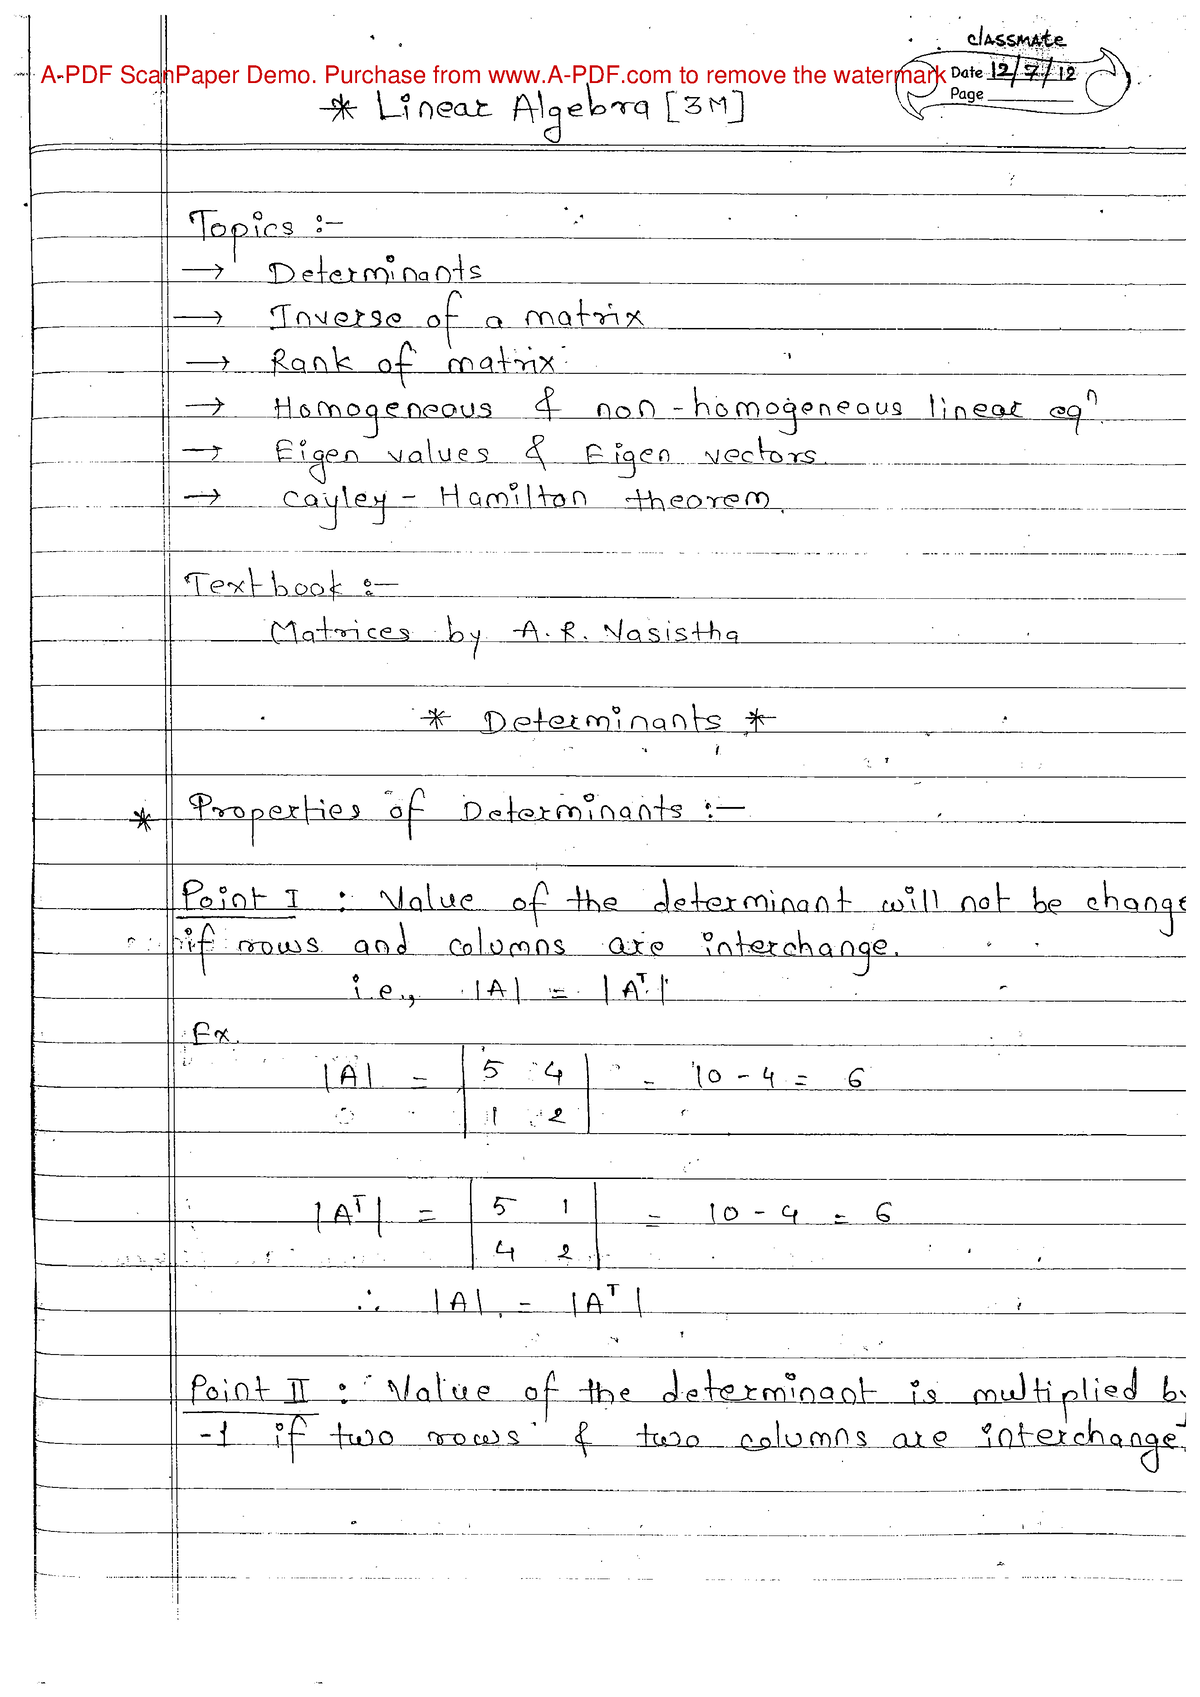 Linear-algebra-new - Numerical Methods - Classmate Scanpaper Demo 